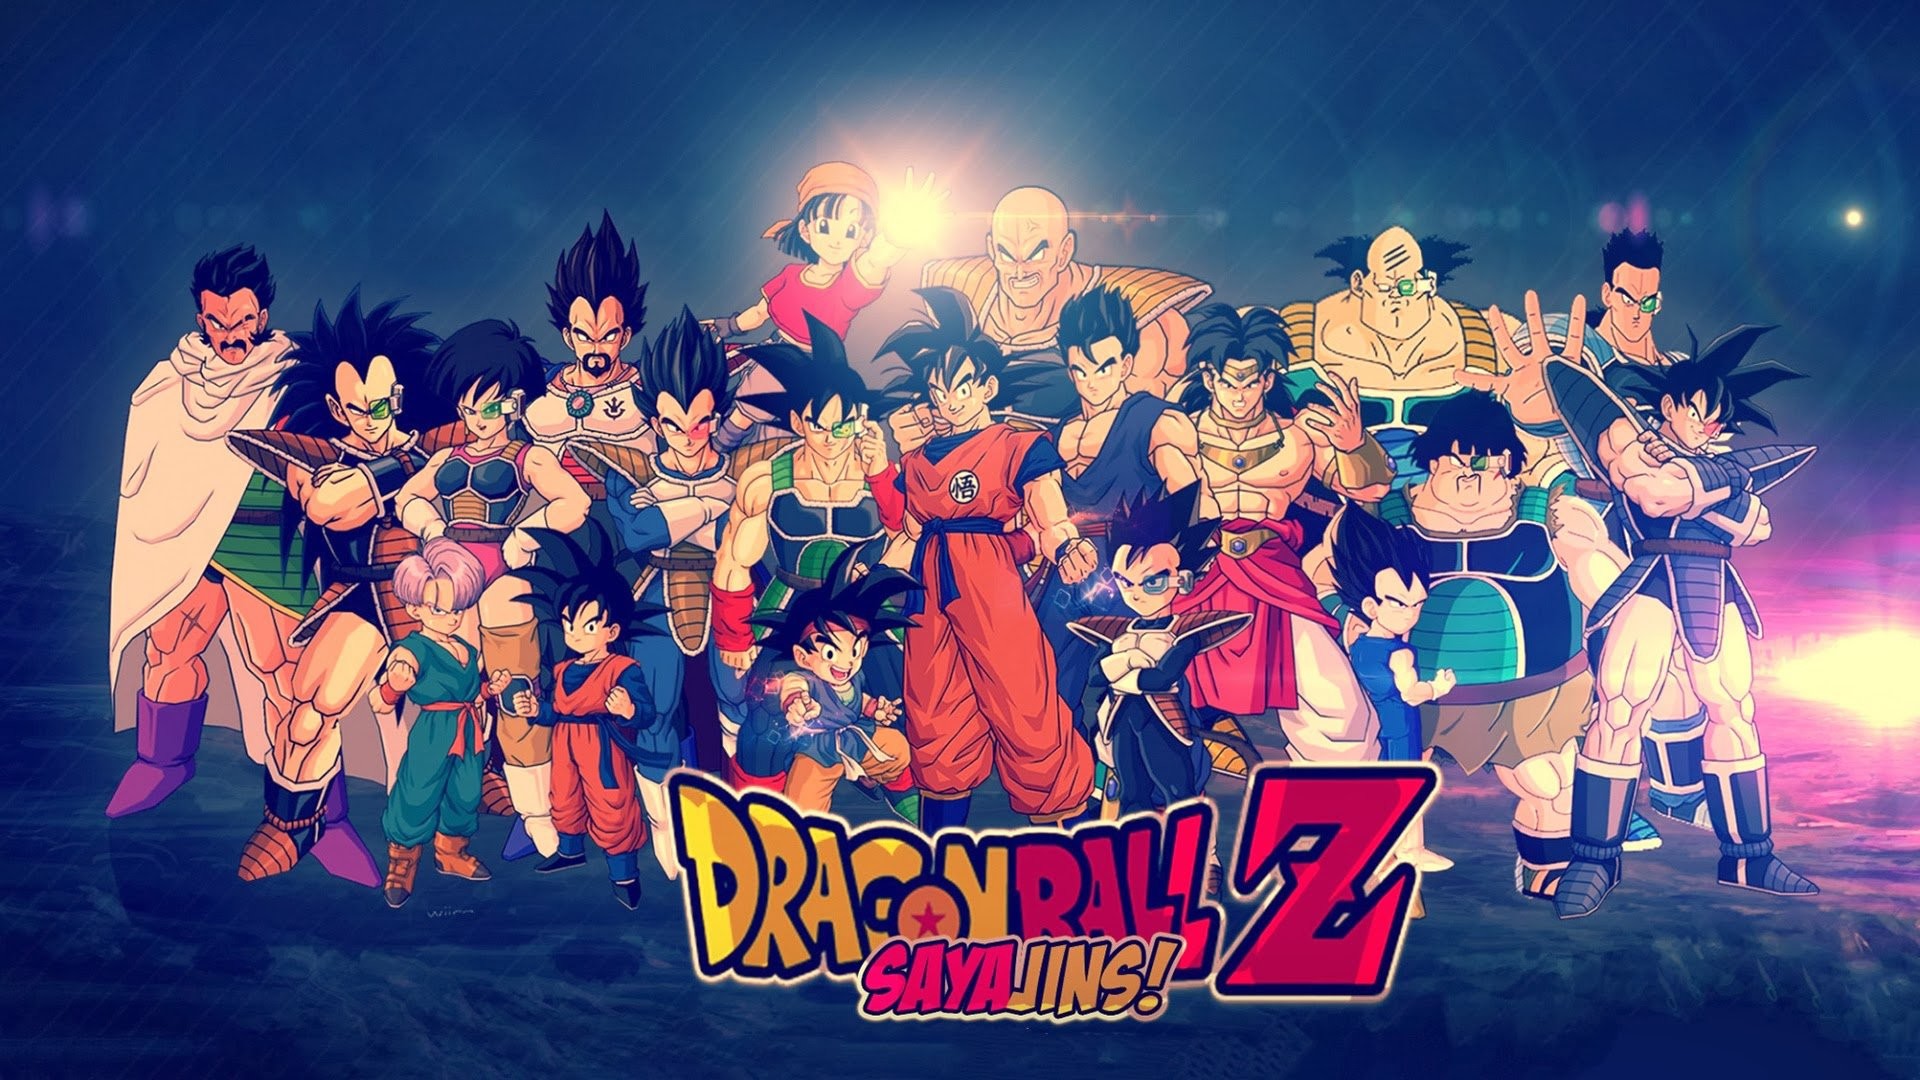 HD Wallpaper Background ID605799. Anime Dragon Ball Z